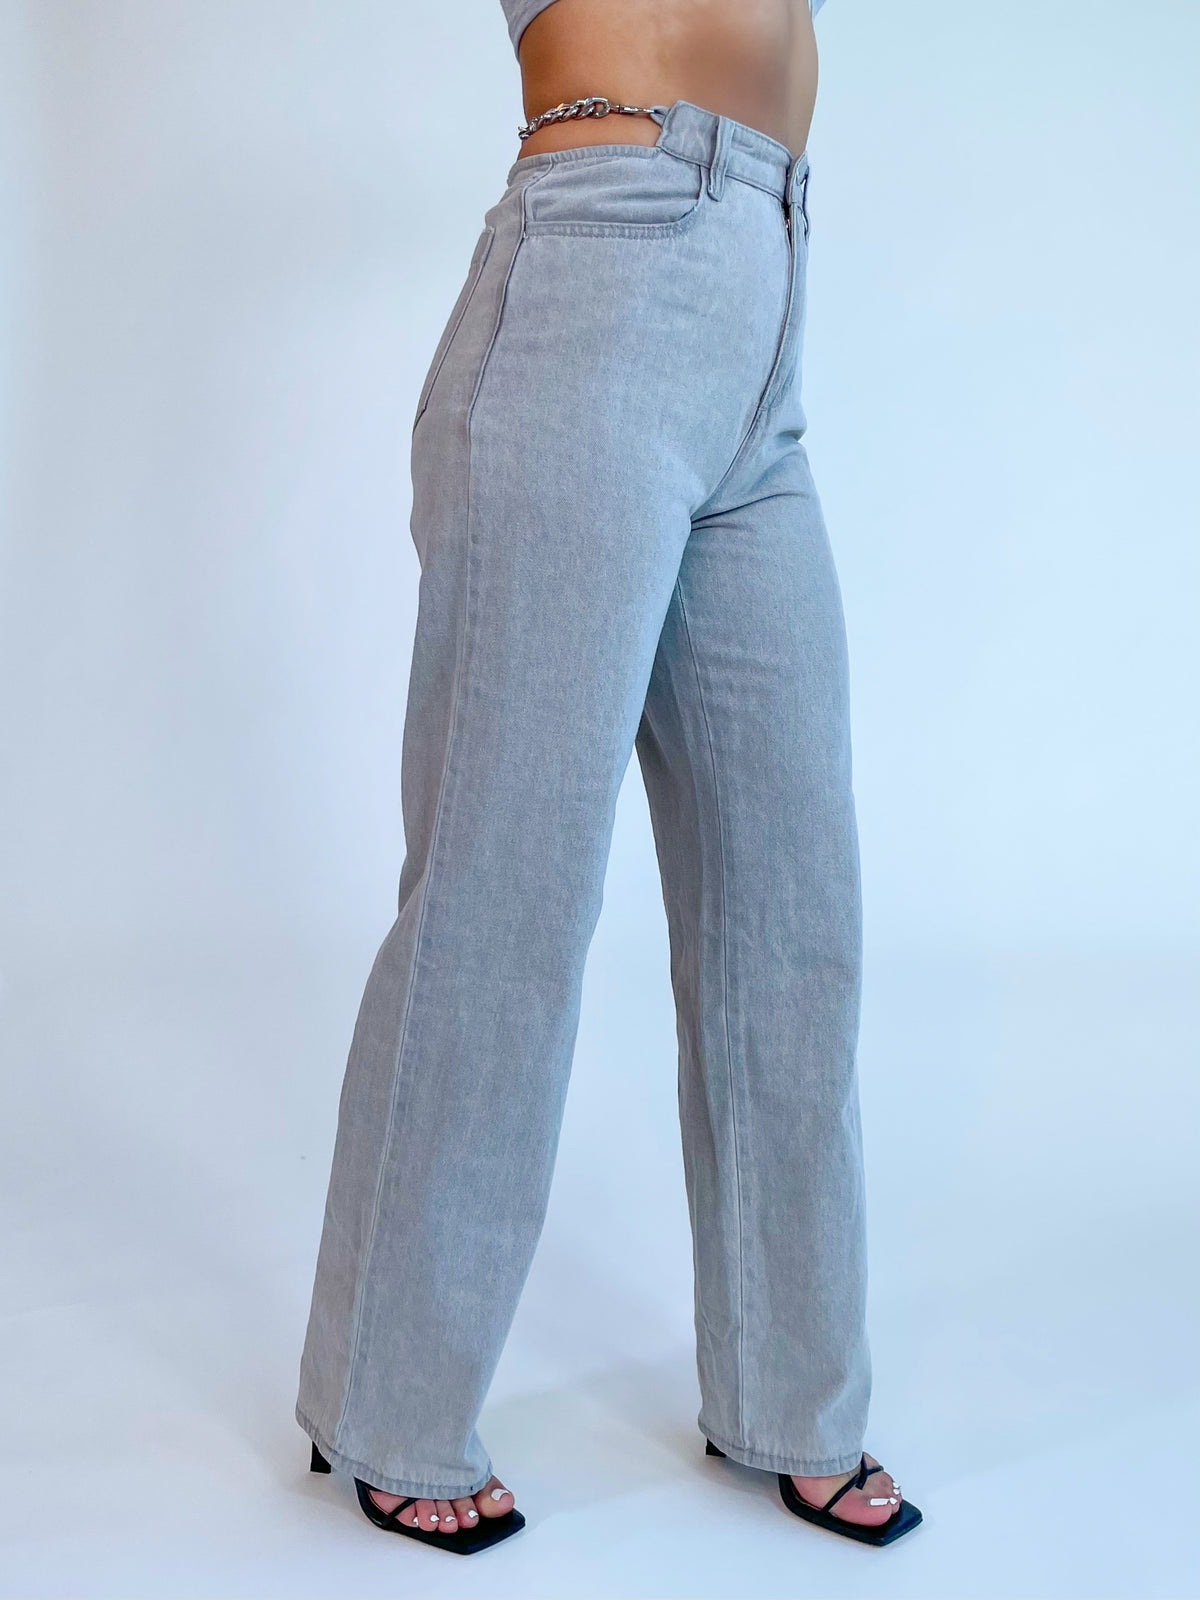 grey straight leg jeans, high waisted, hip cutouts, chain waist detail (on both sides)